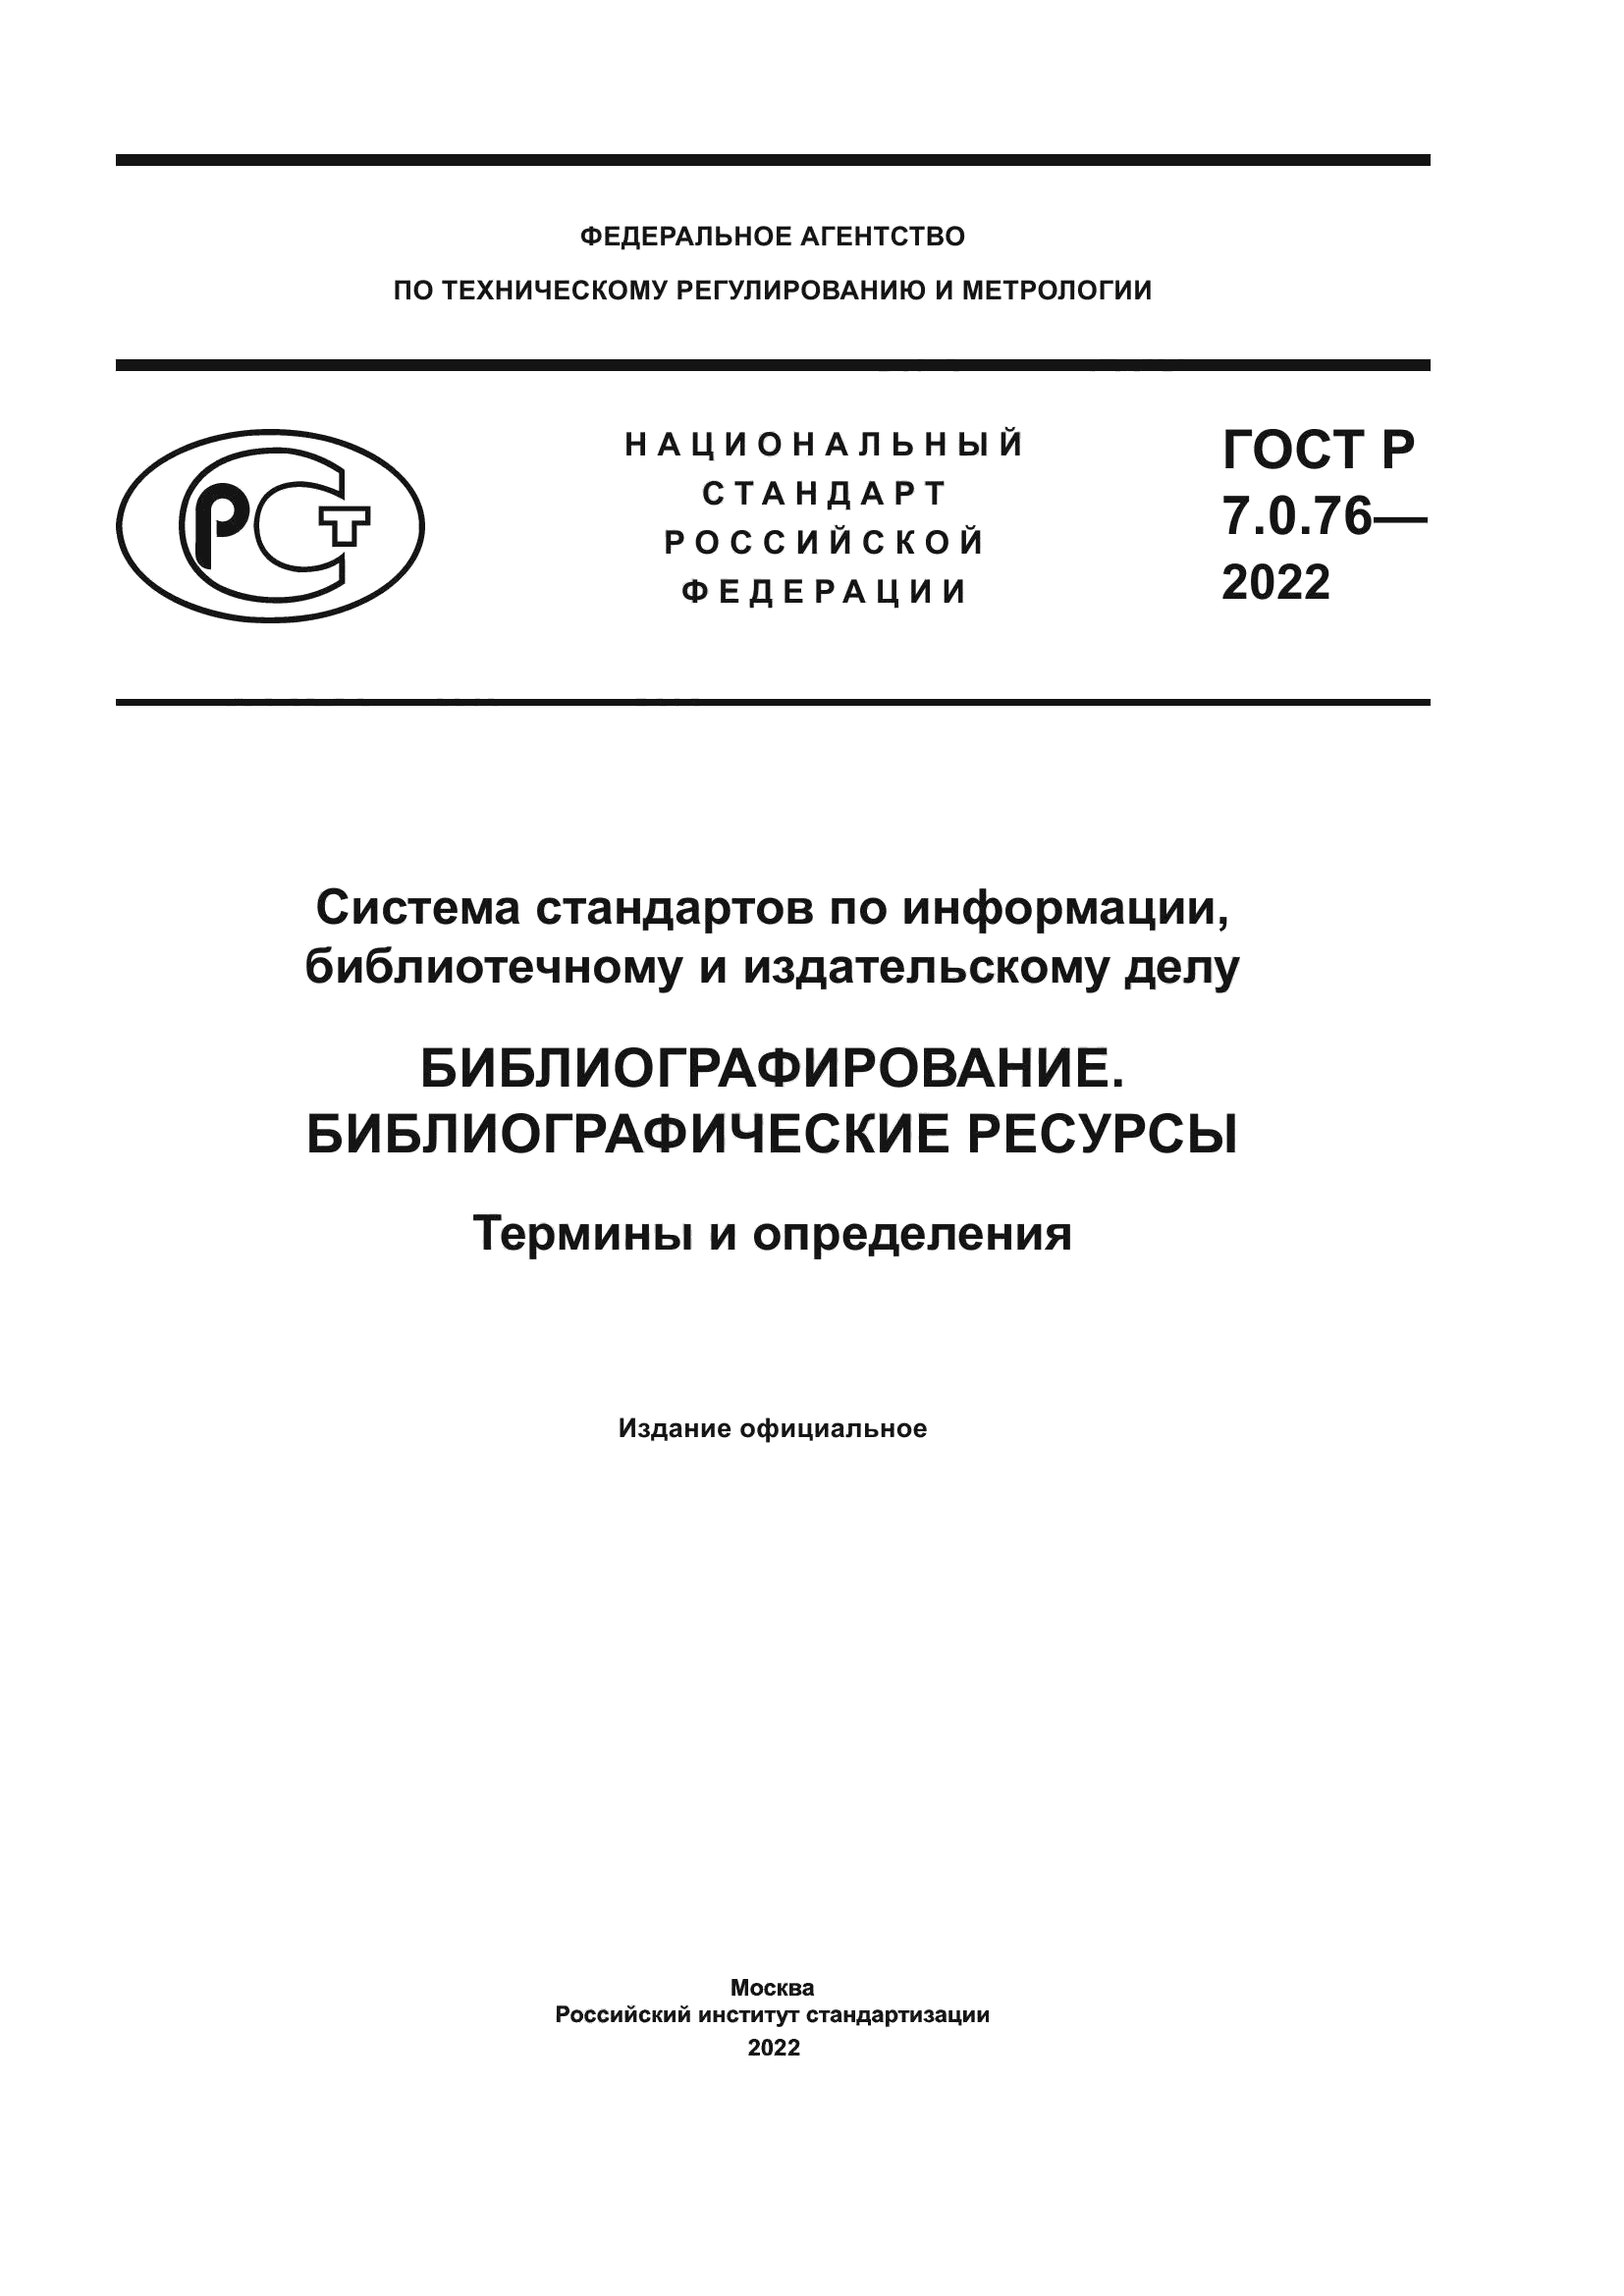 ГОСТ Р 7.0.76-2022